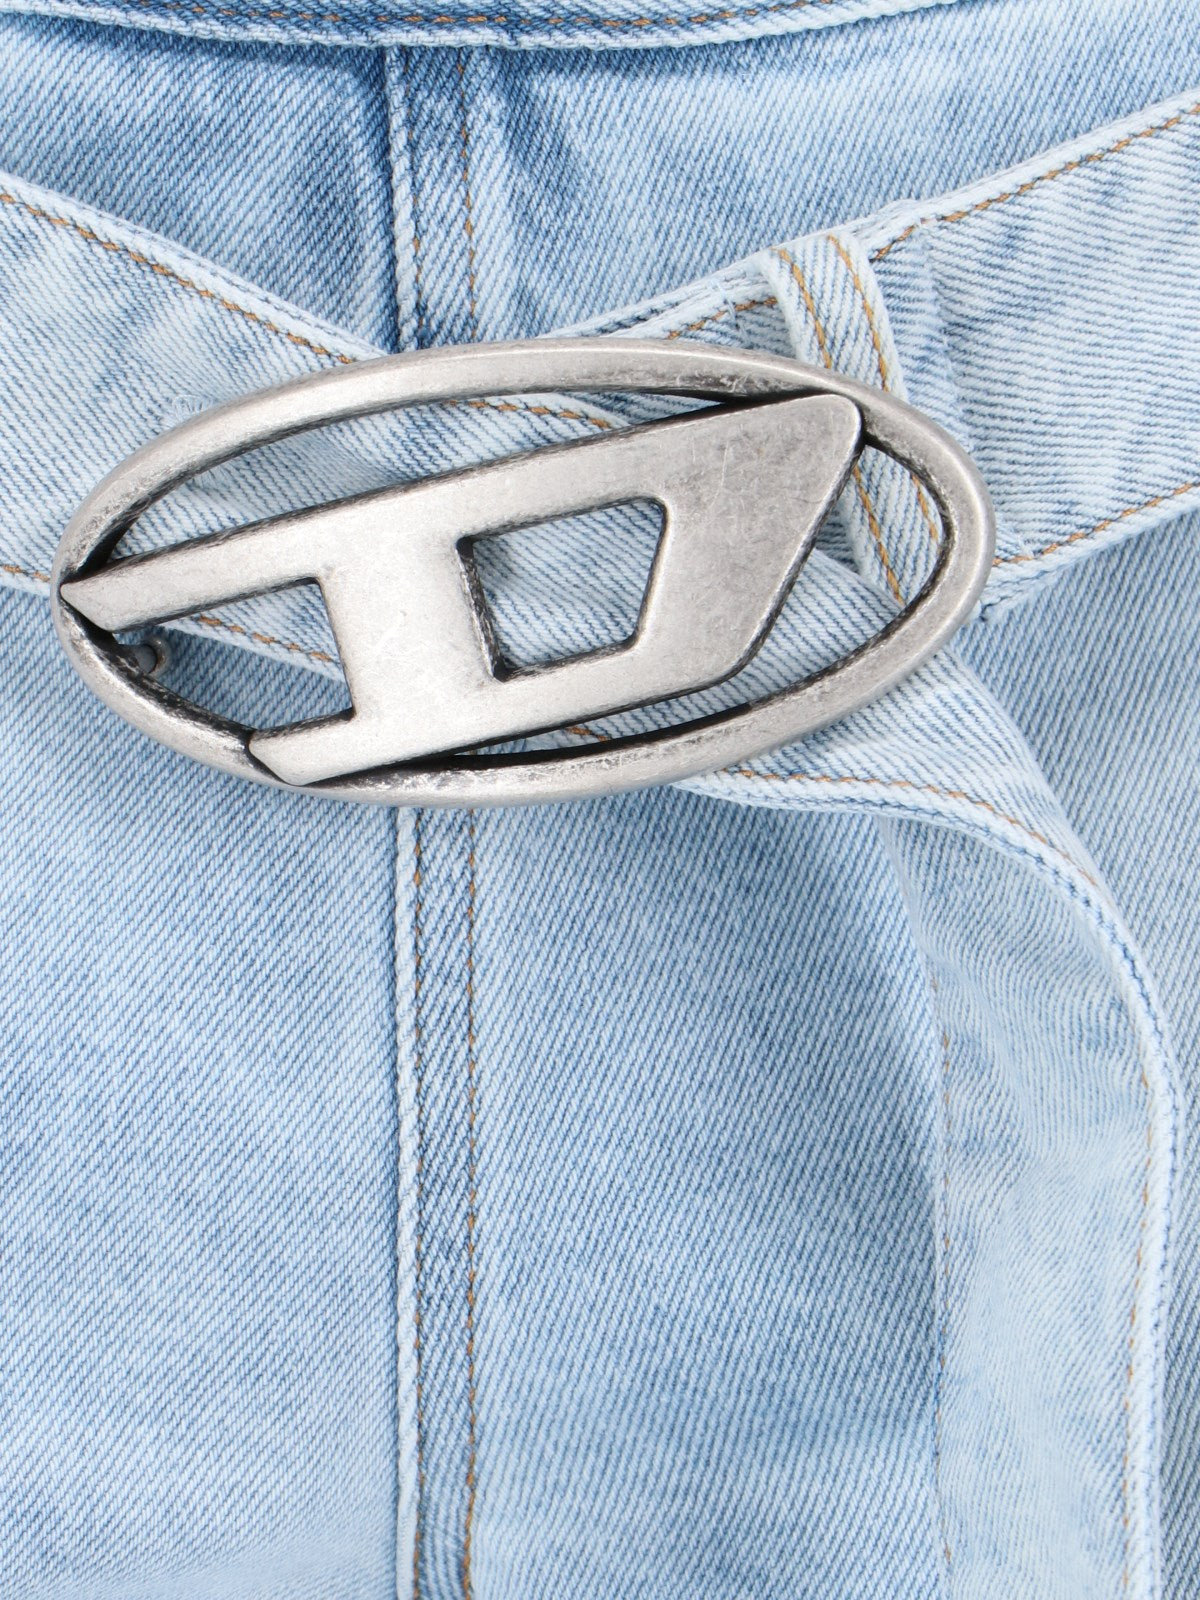 Diesel Jeans bootcut "d-ebbybelt 0jgaa"-Jeans zampa-Diesel-Jeans bootcut "d-ebbybelt 0jgaa" Diesel, in denim azzurro, passanti cintura, cintura logo metallico argentato fronte, chiusura zip laterale, fondo svasato-Dresso